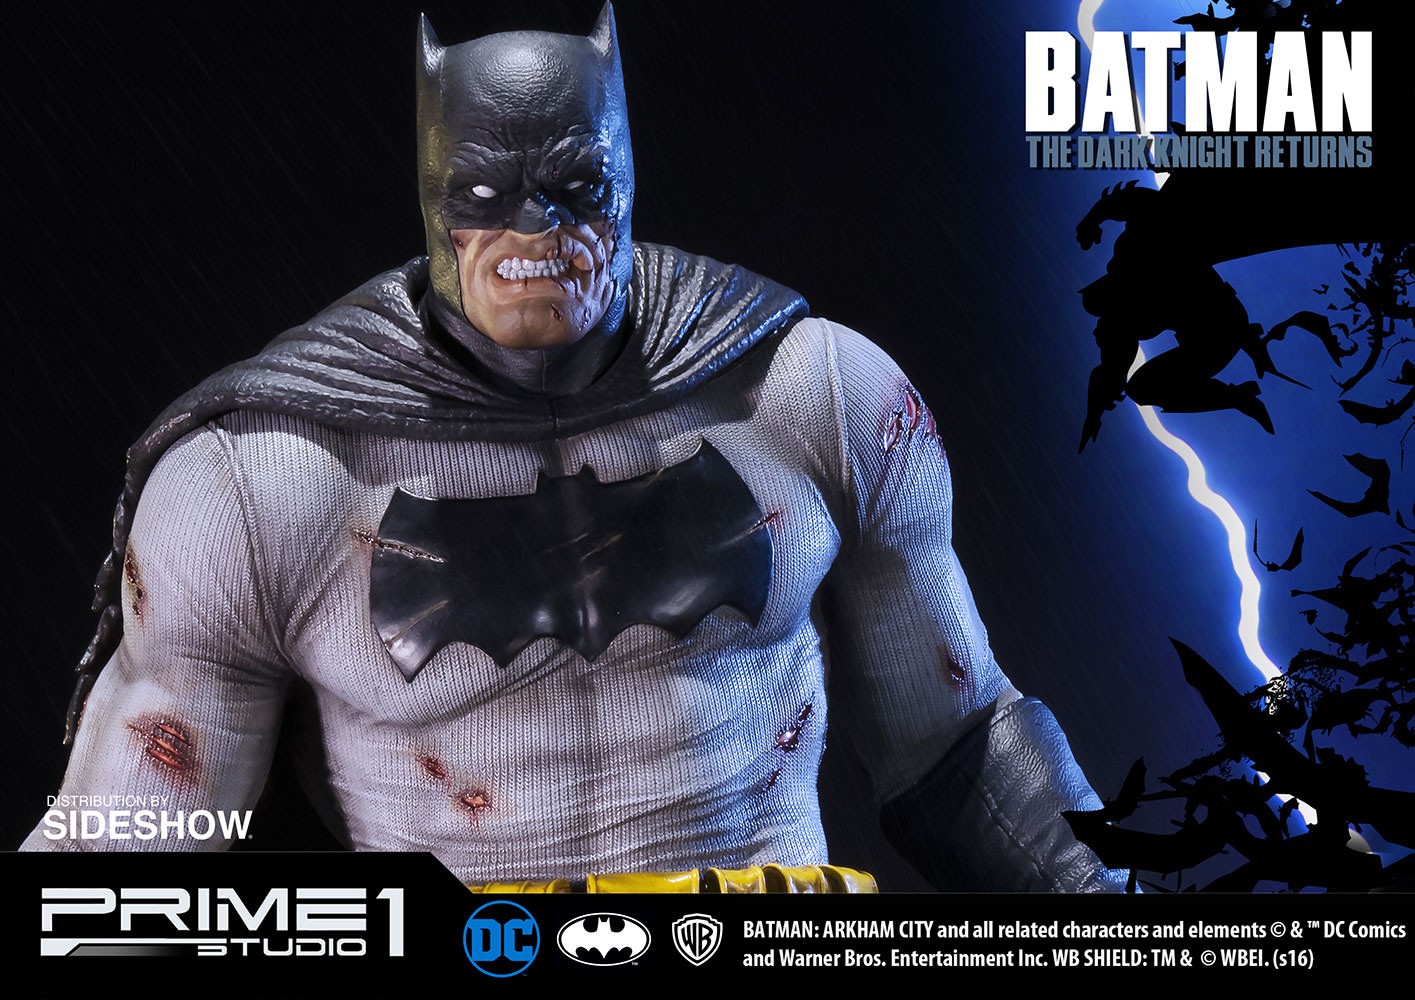 The Dark Knight Returns Batman Exclusive Edition (Prototype Shown) View 13